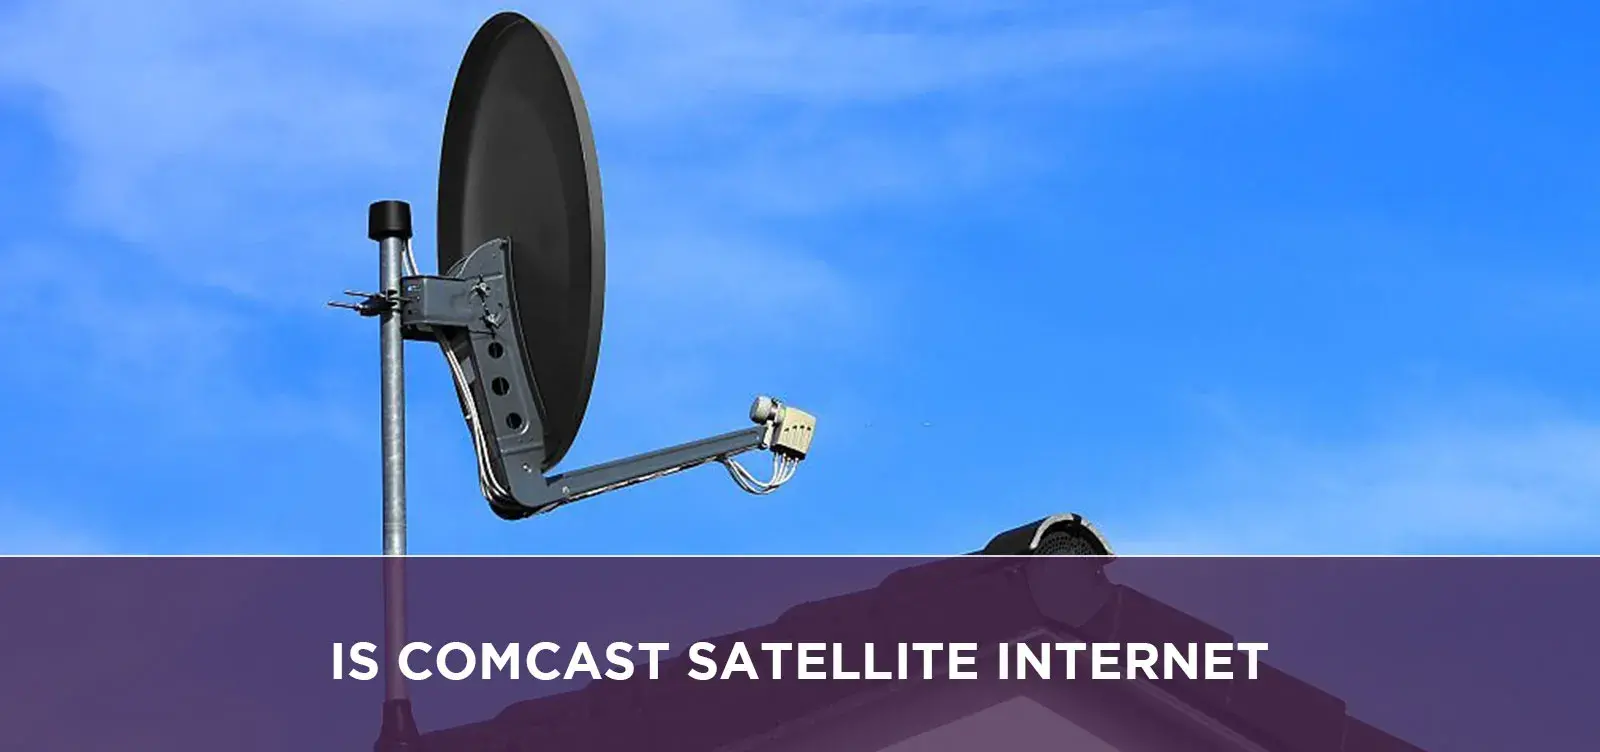 Is Comcast Satellite Internet?